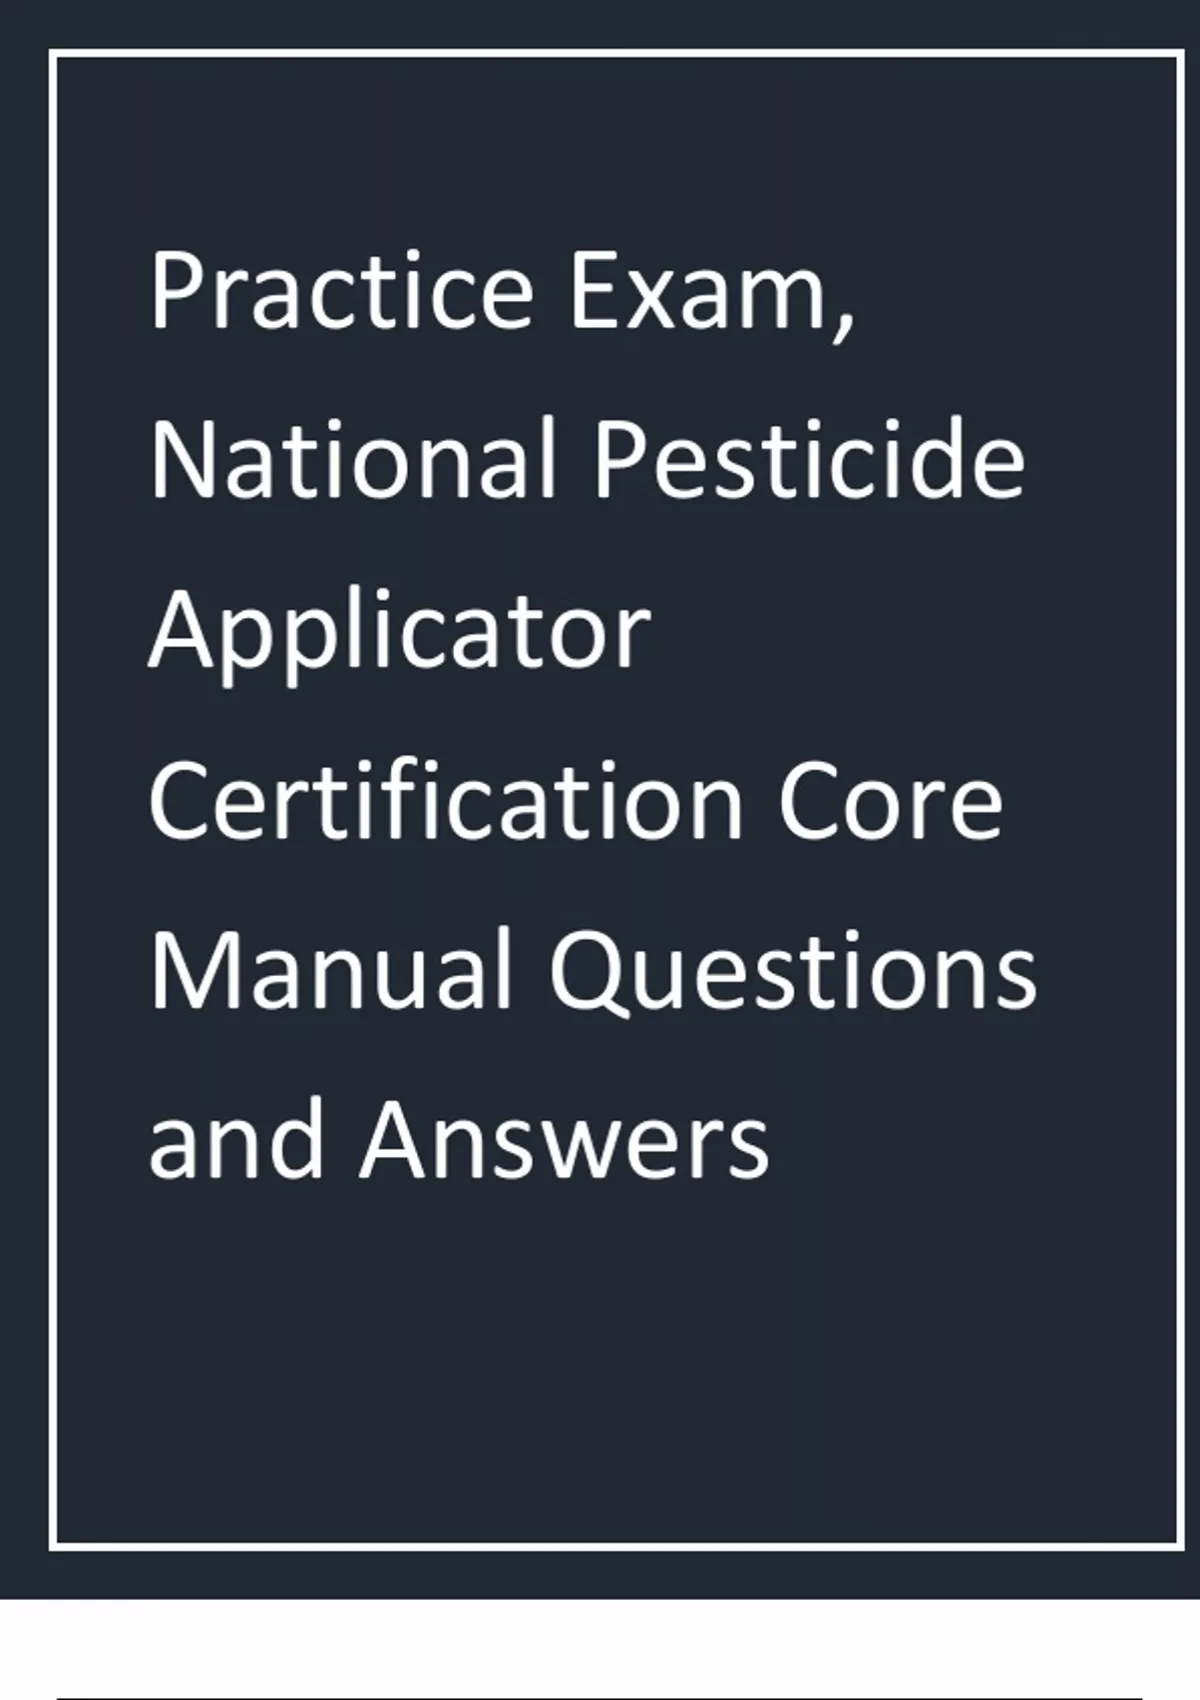 Practice Exam National Pesticide Applicator Certification Core Manual